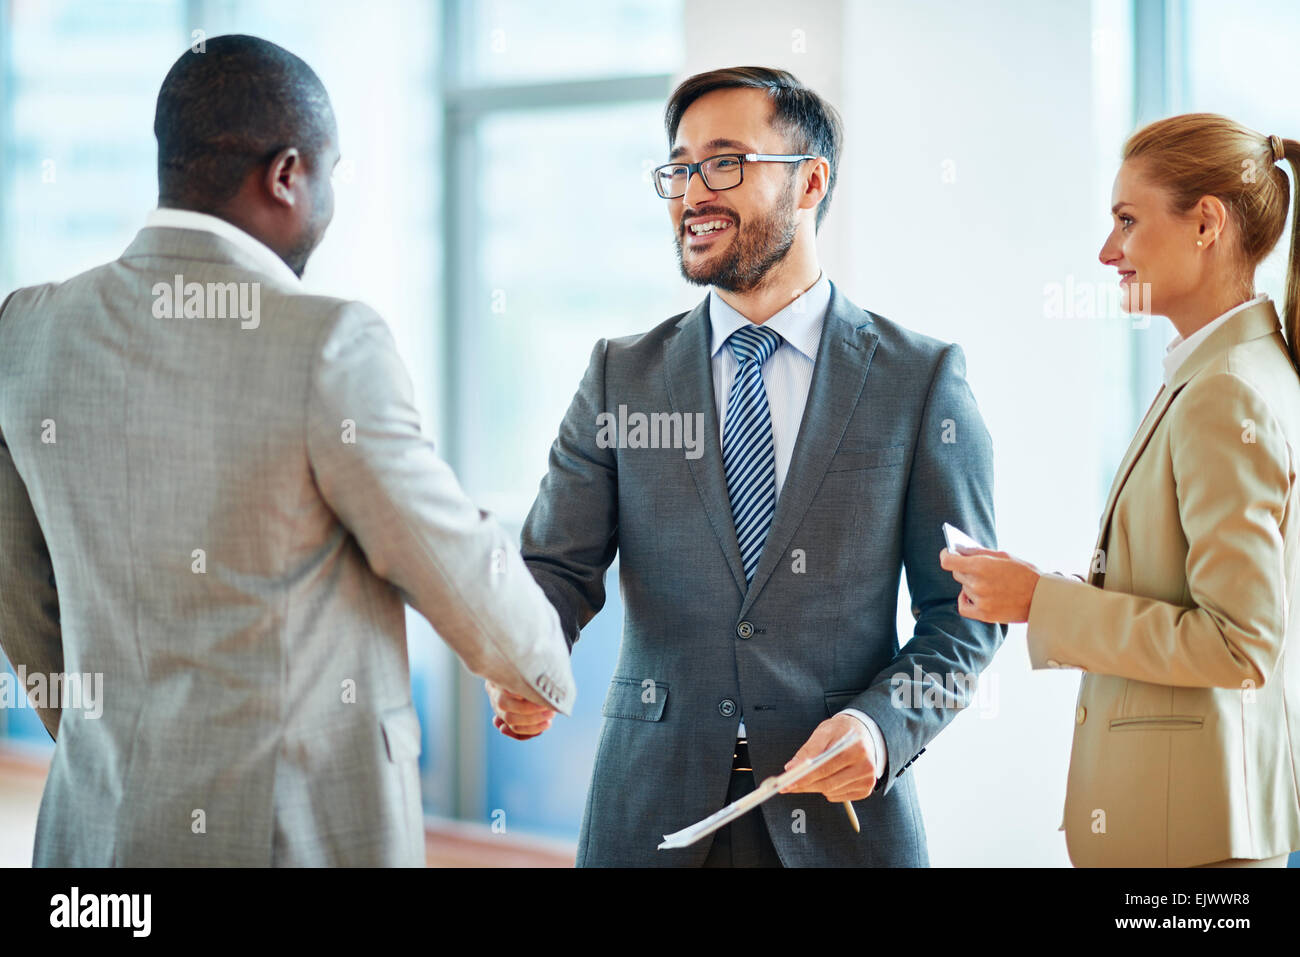 Felice di handshaking gli imprenditori dopo la sorprendente deal Foto Stock